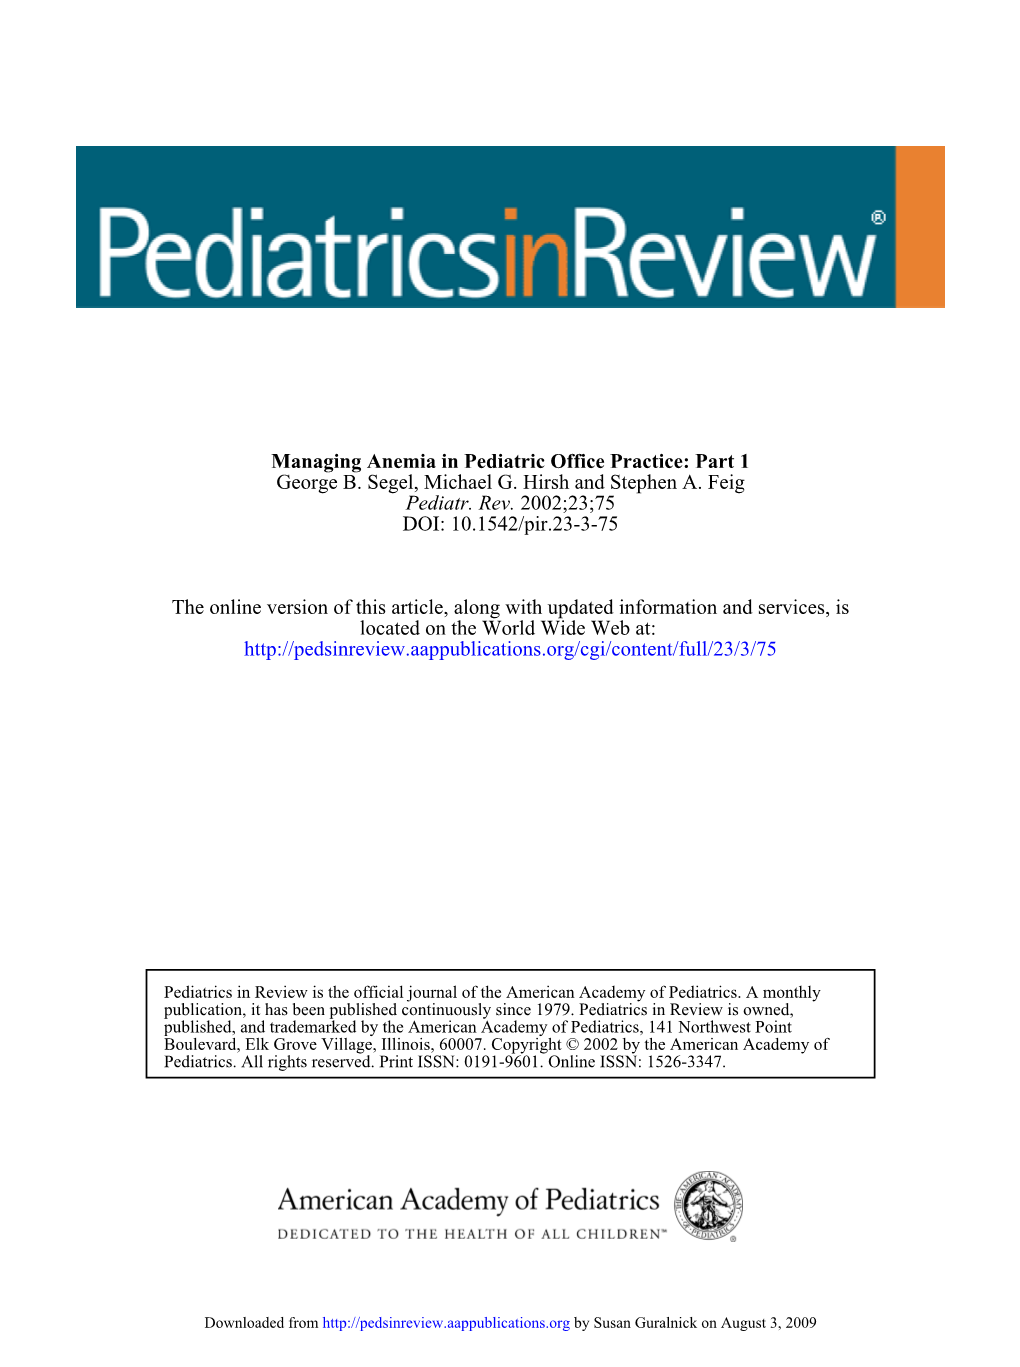 Managing Anemia in Pediatric Office Practice: Part 1 George B